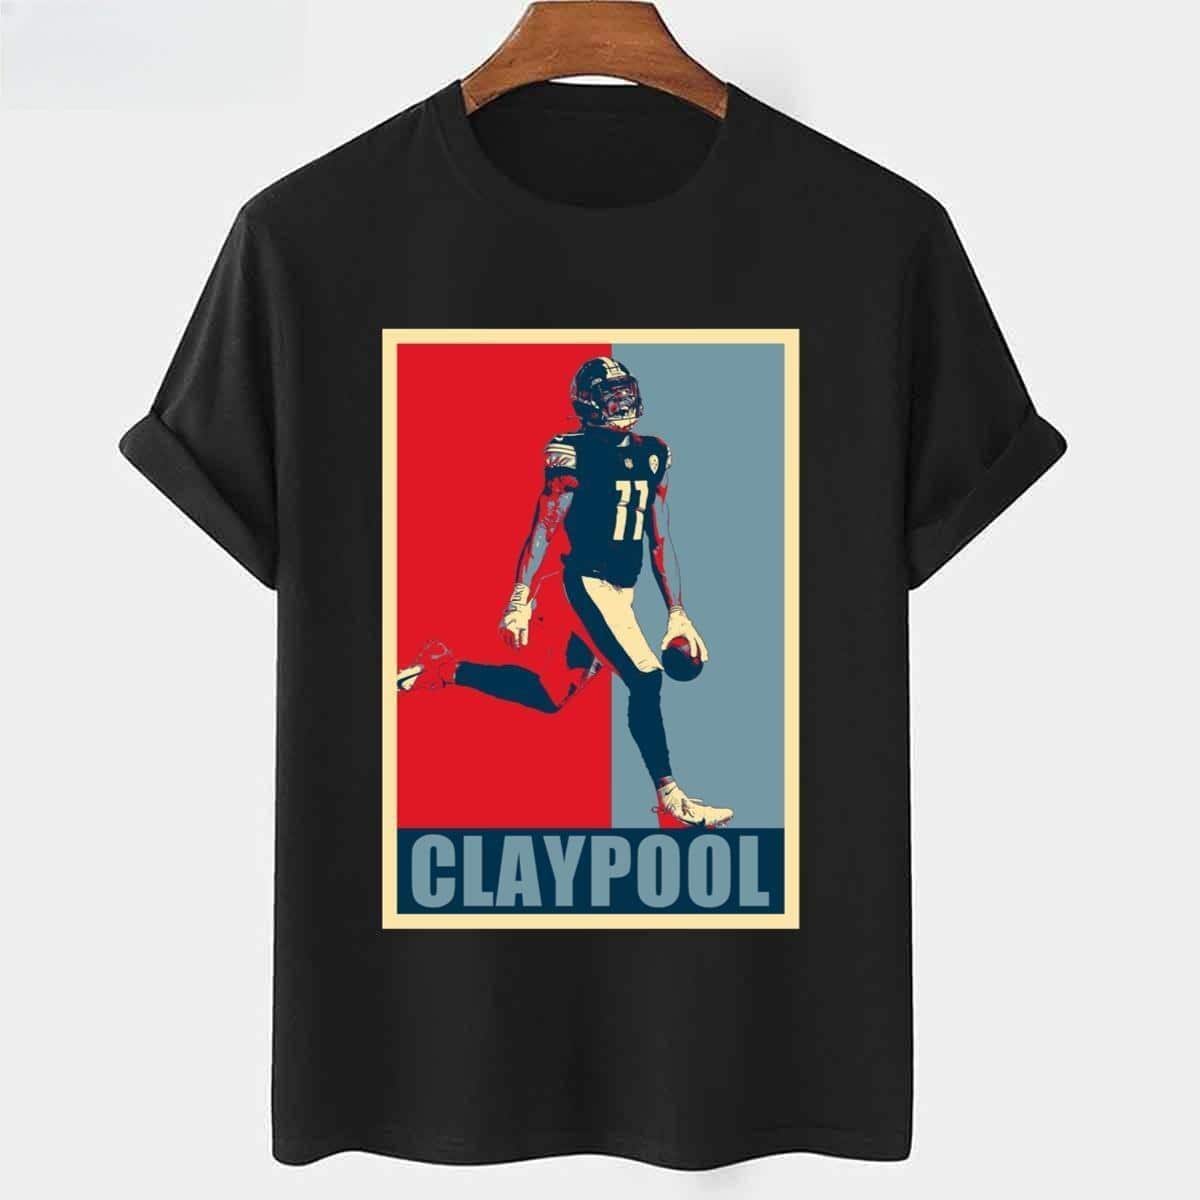 Chase Claypool Hope T-Shirt